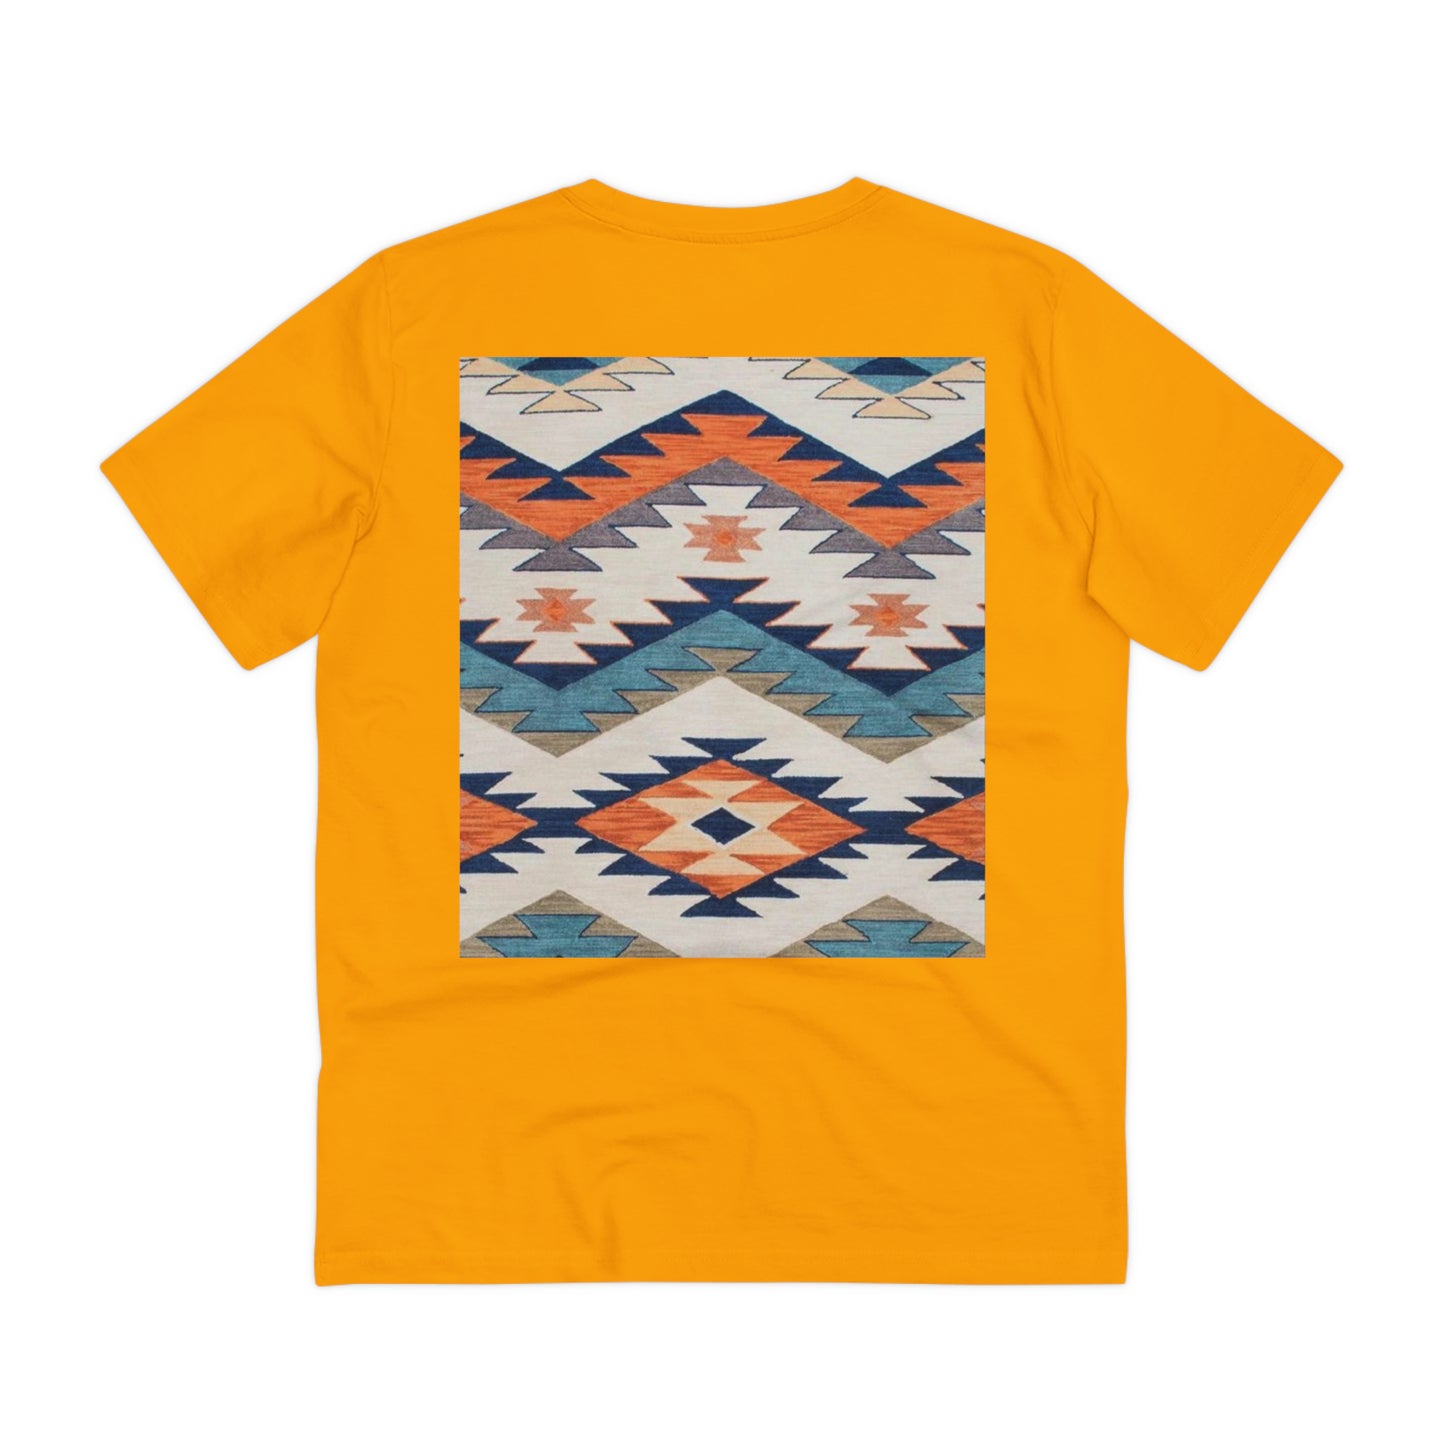 Camiseta de Chacana, chacana, camiseta cruz andina, Chakana, camiseta hombre, cruz chacana, cruz inca, camiseta de mujer, viajero, Andes.